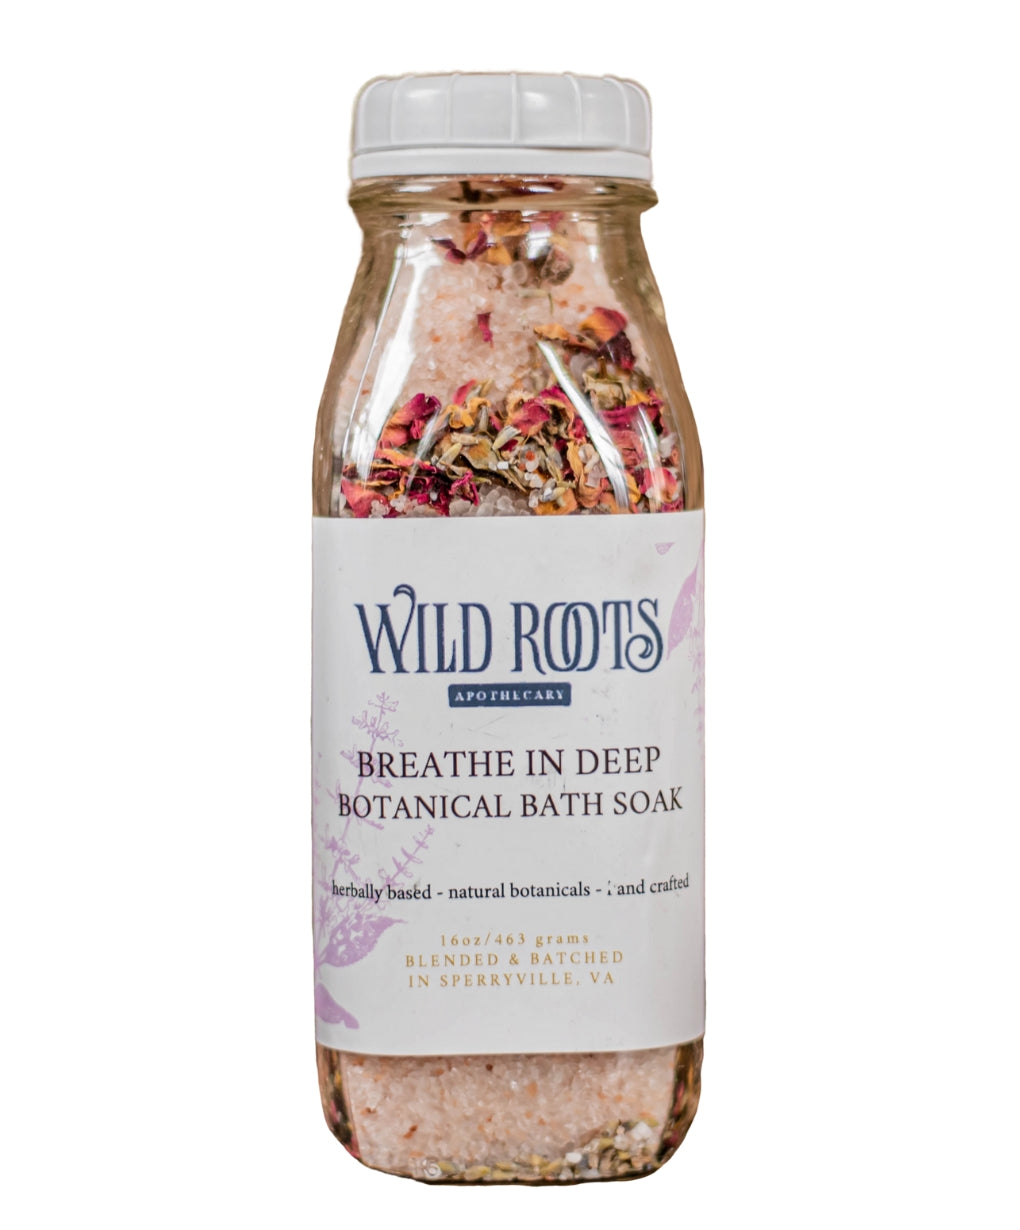 Breathe in Deep Botanical Bath Salt Soak—Wild Roots Apothecary